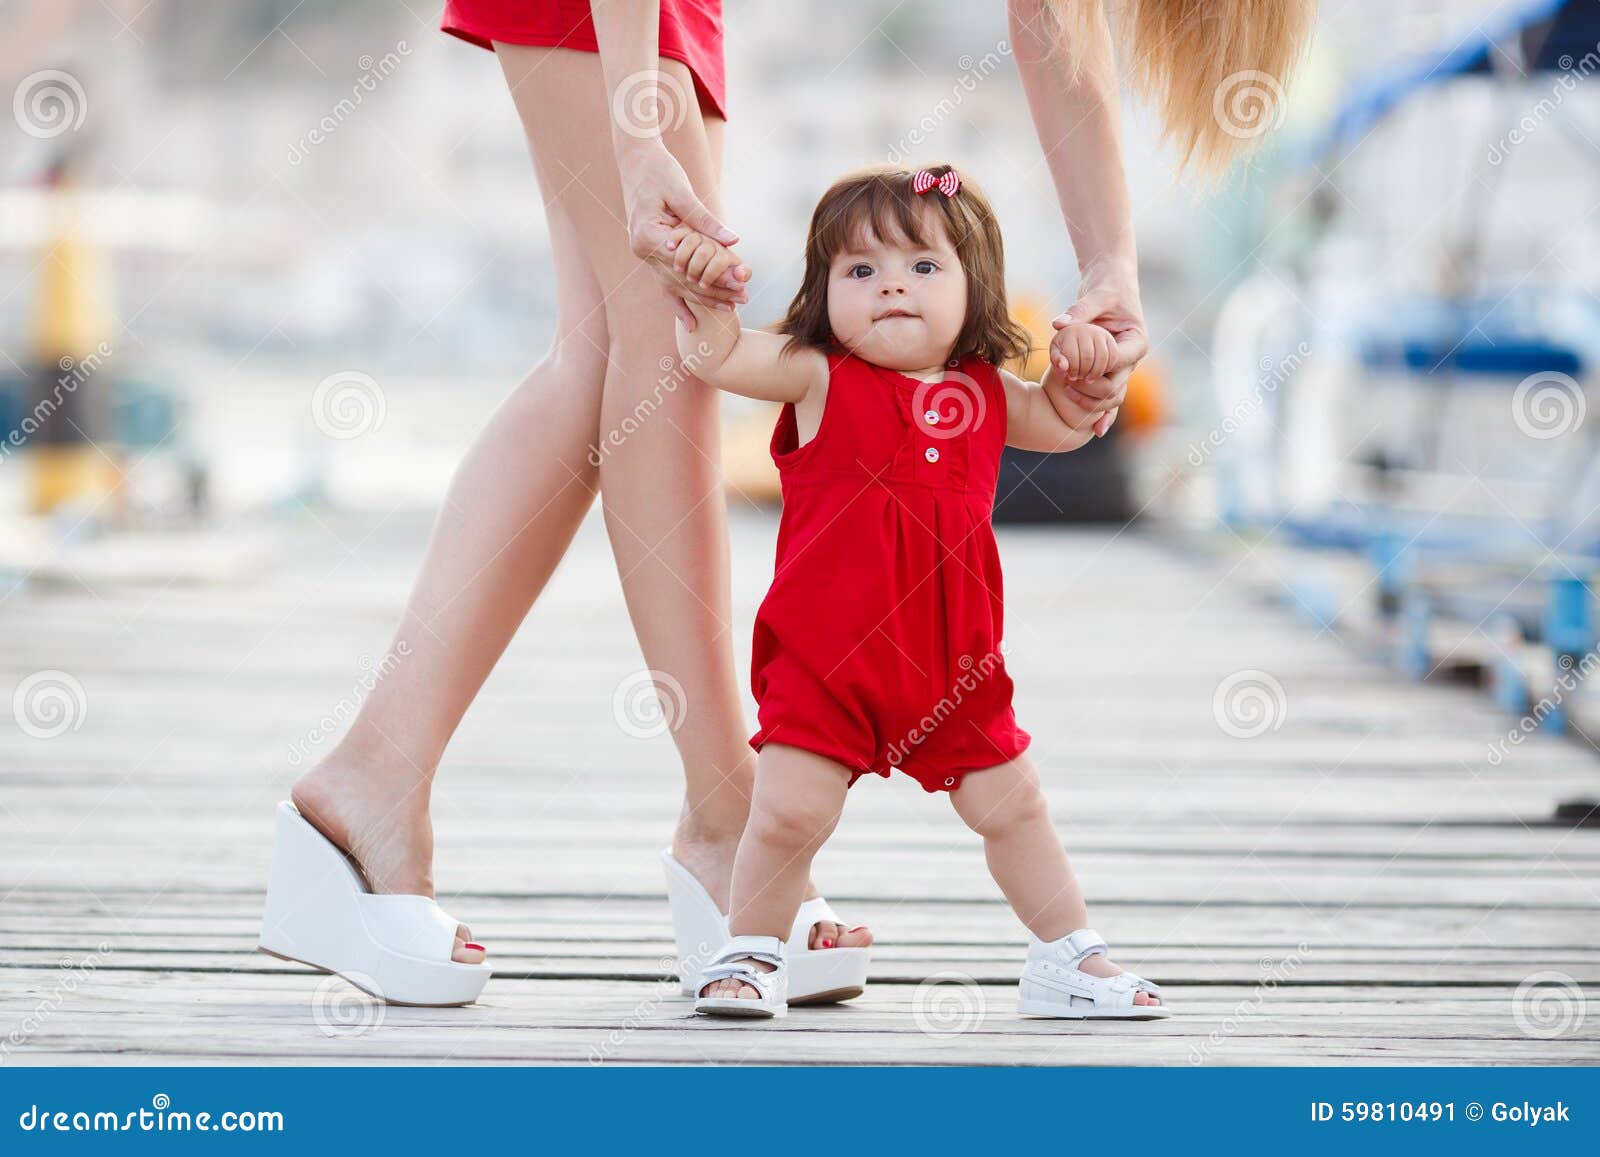 when should baby walk alone